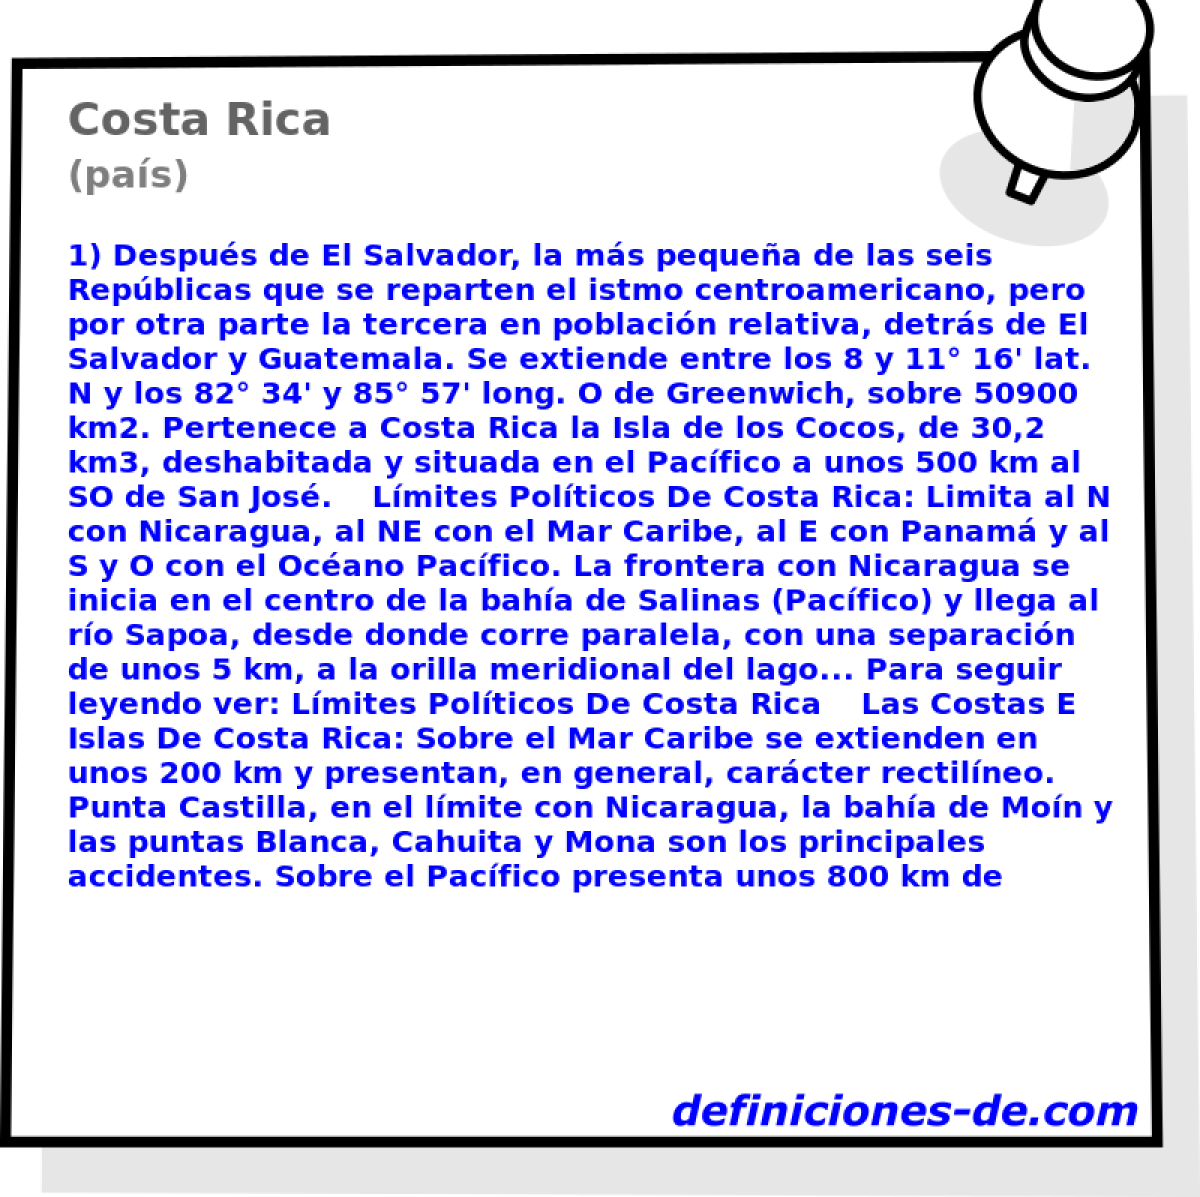 Costa Rica (pas)